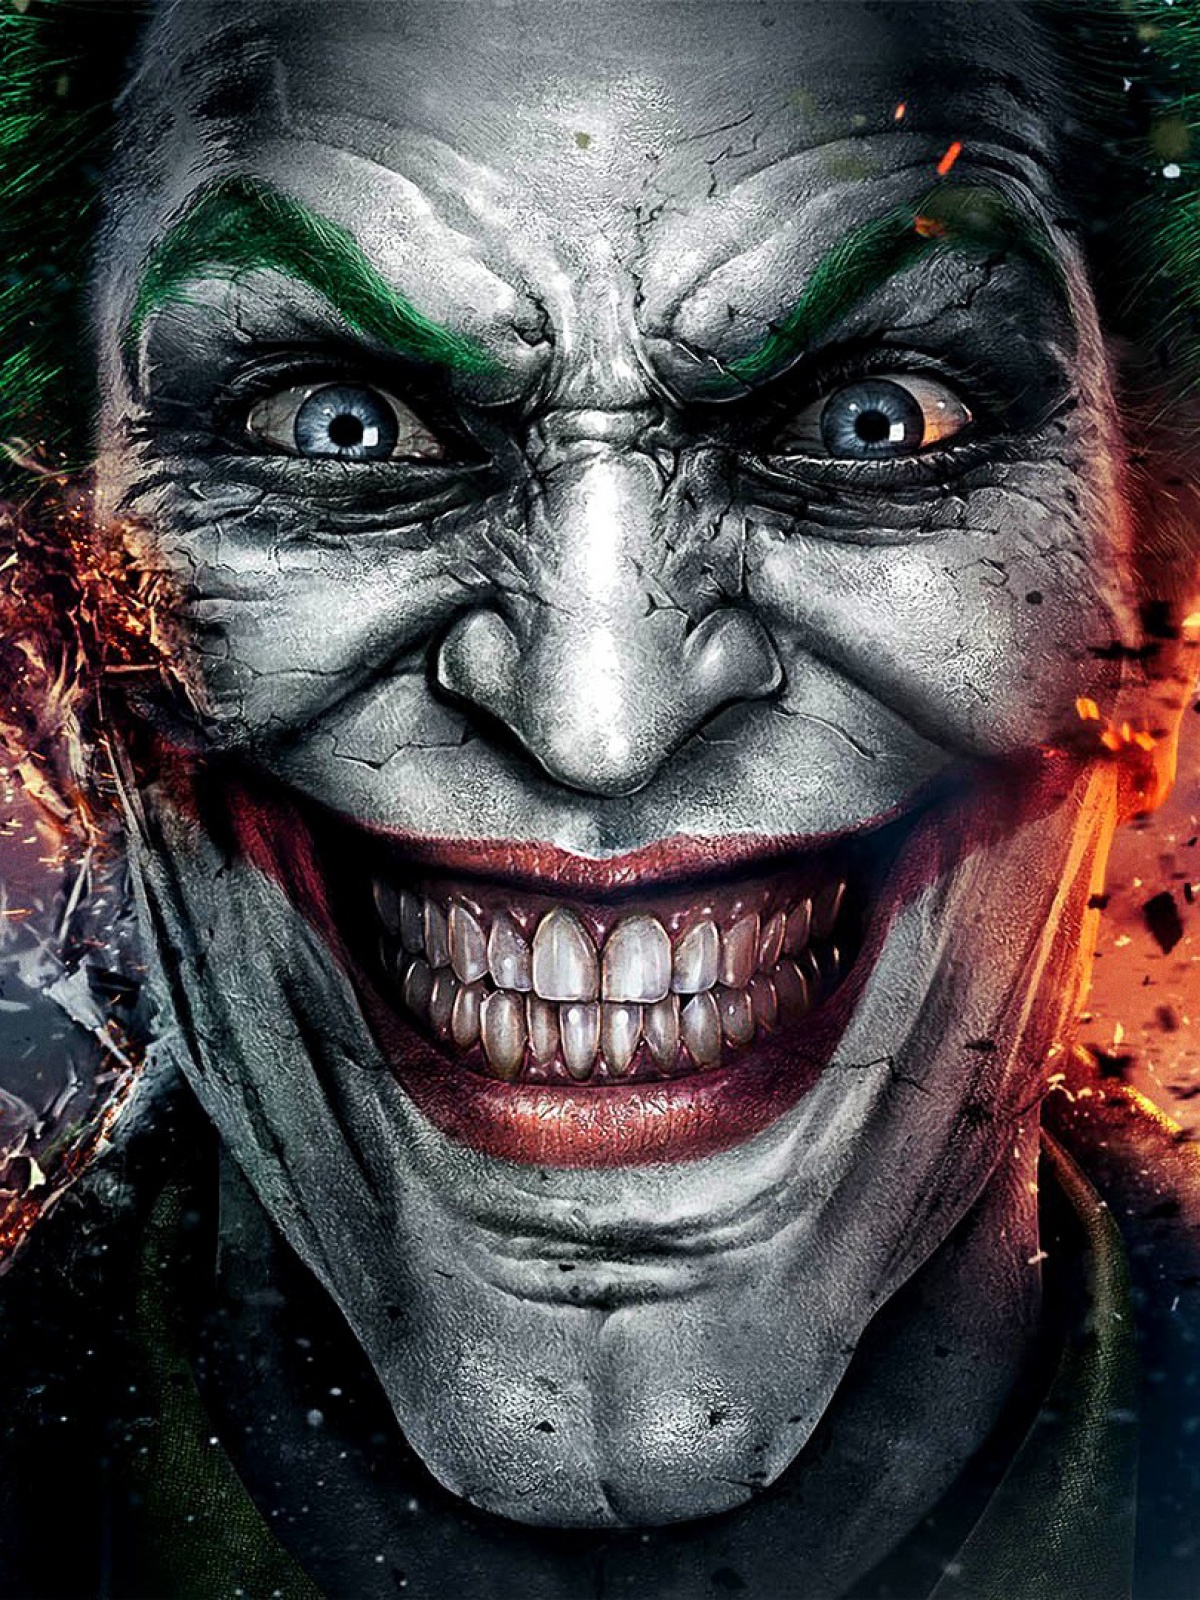 Free download The Joker Batman Smile Android Wallpaper download